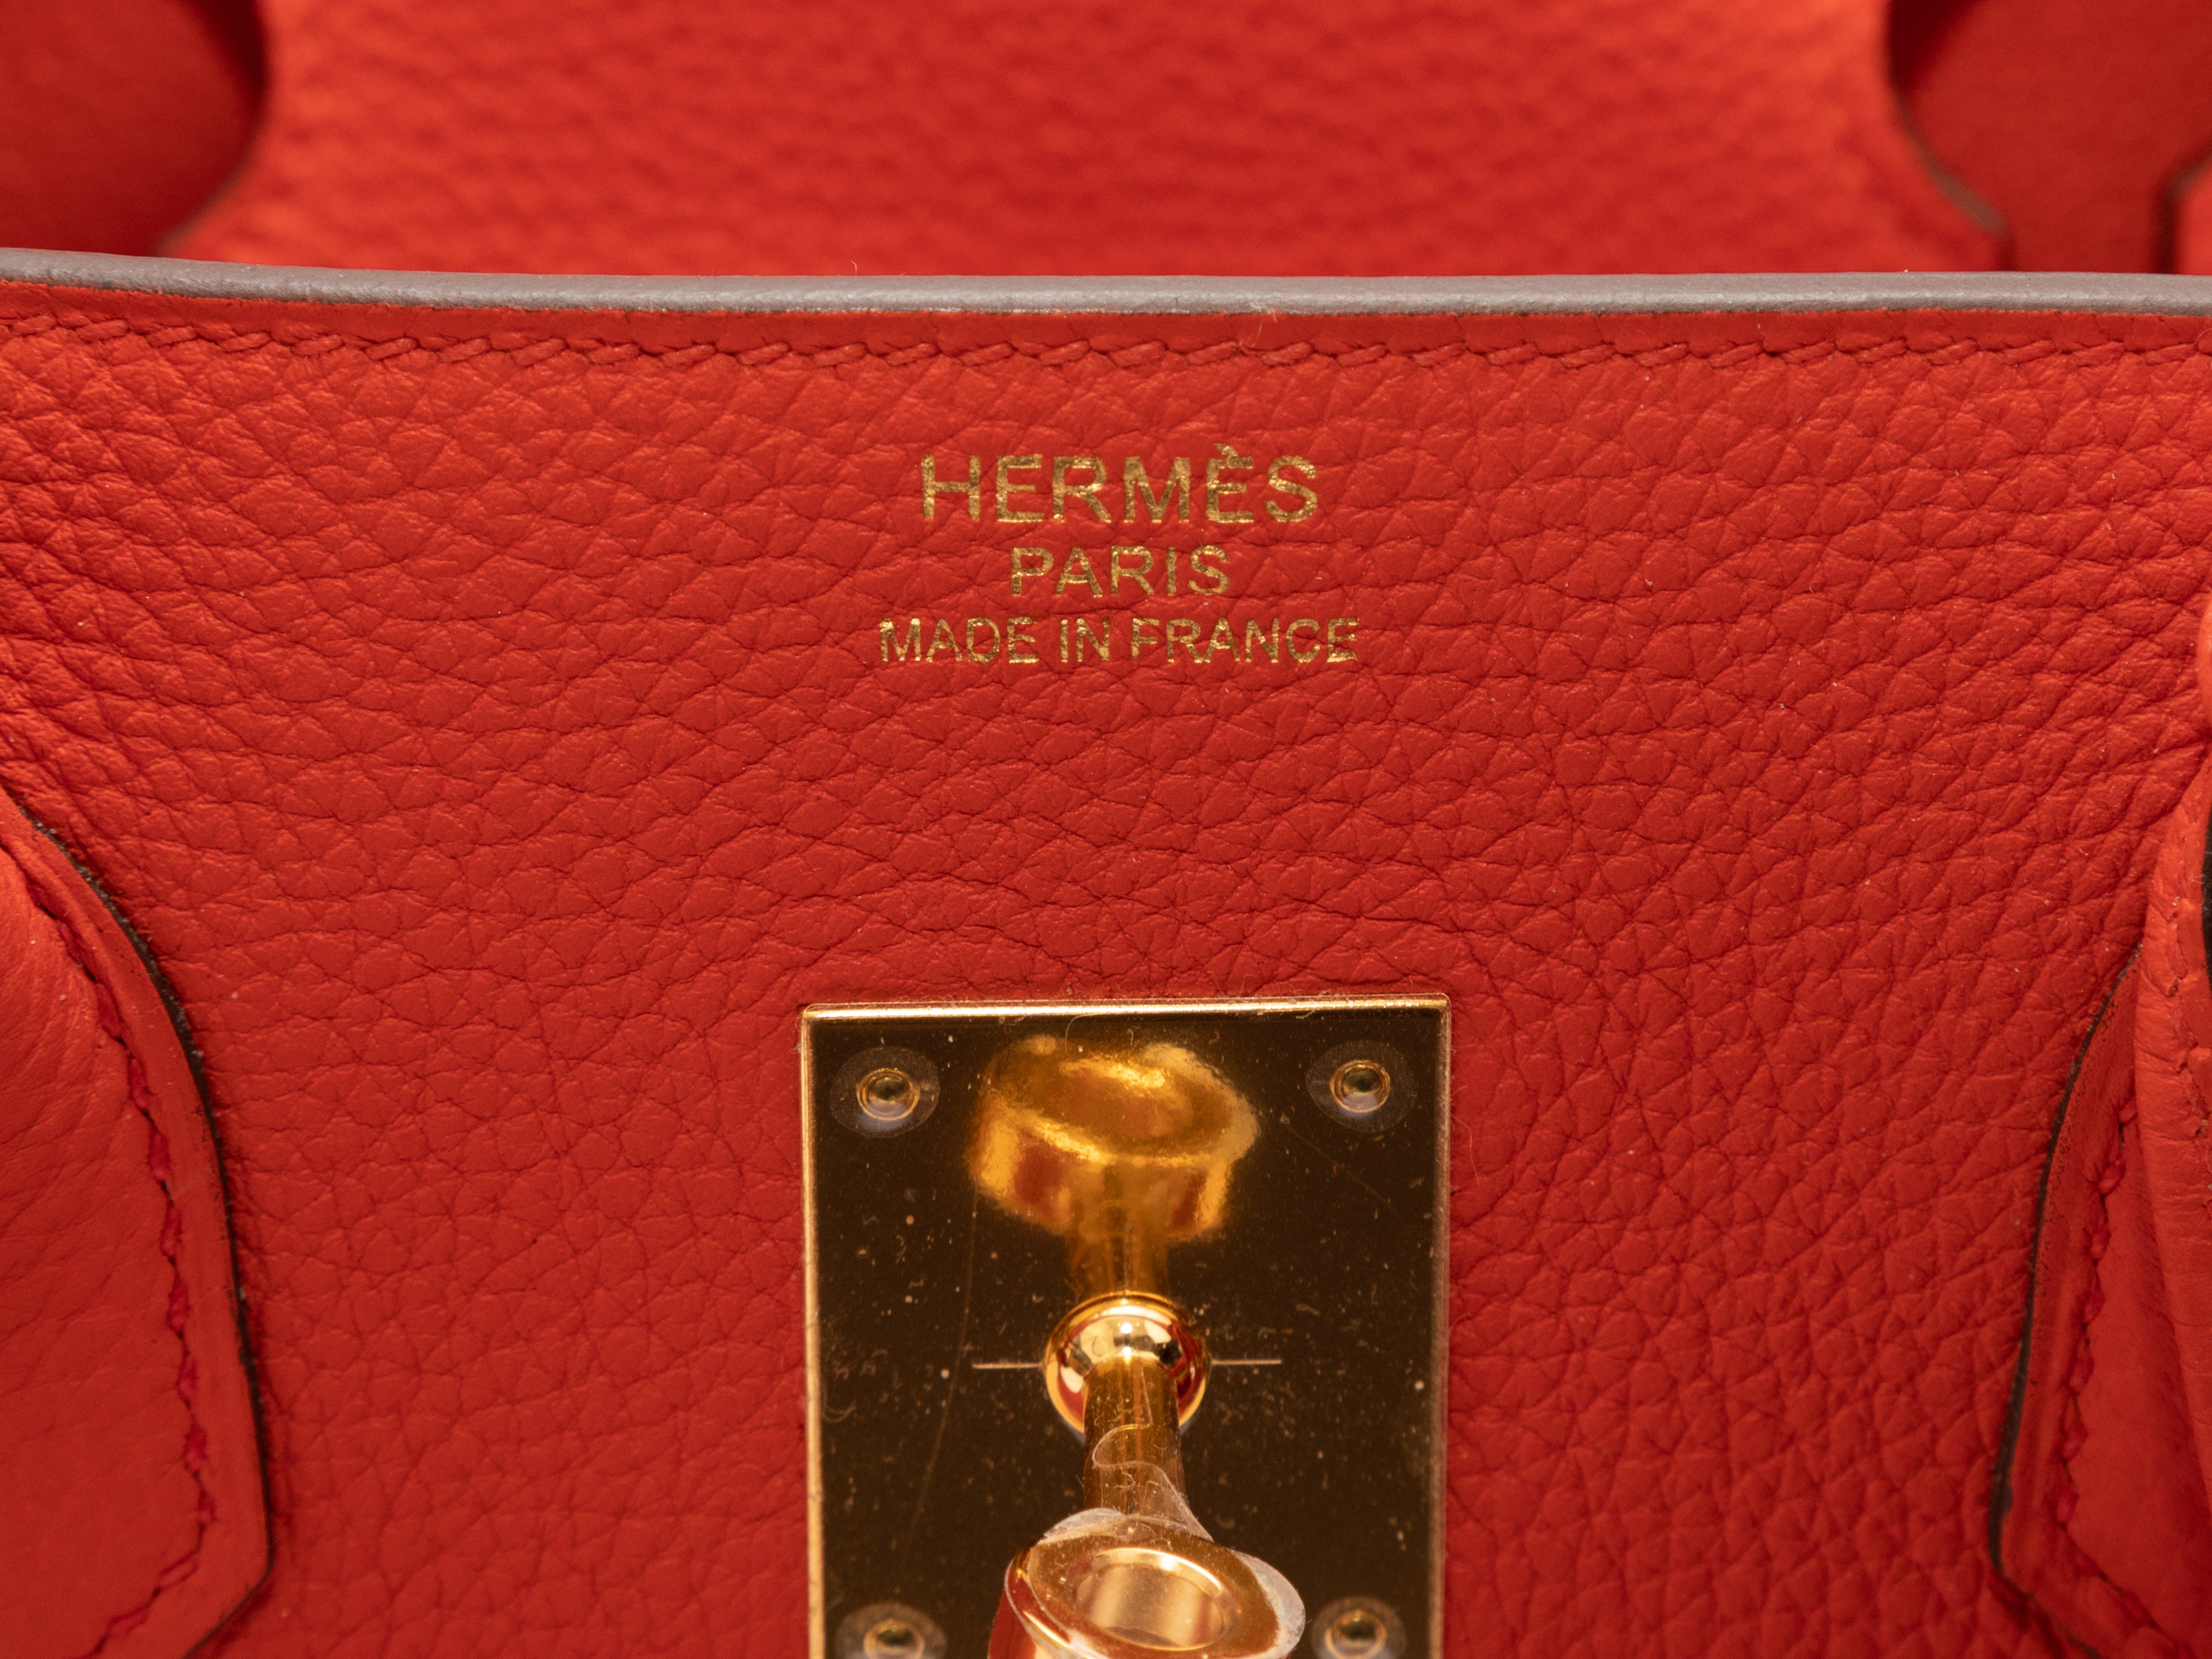 Hermès Birkin 35 handbag in red Capucine Togo leather, SHW